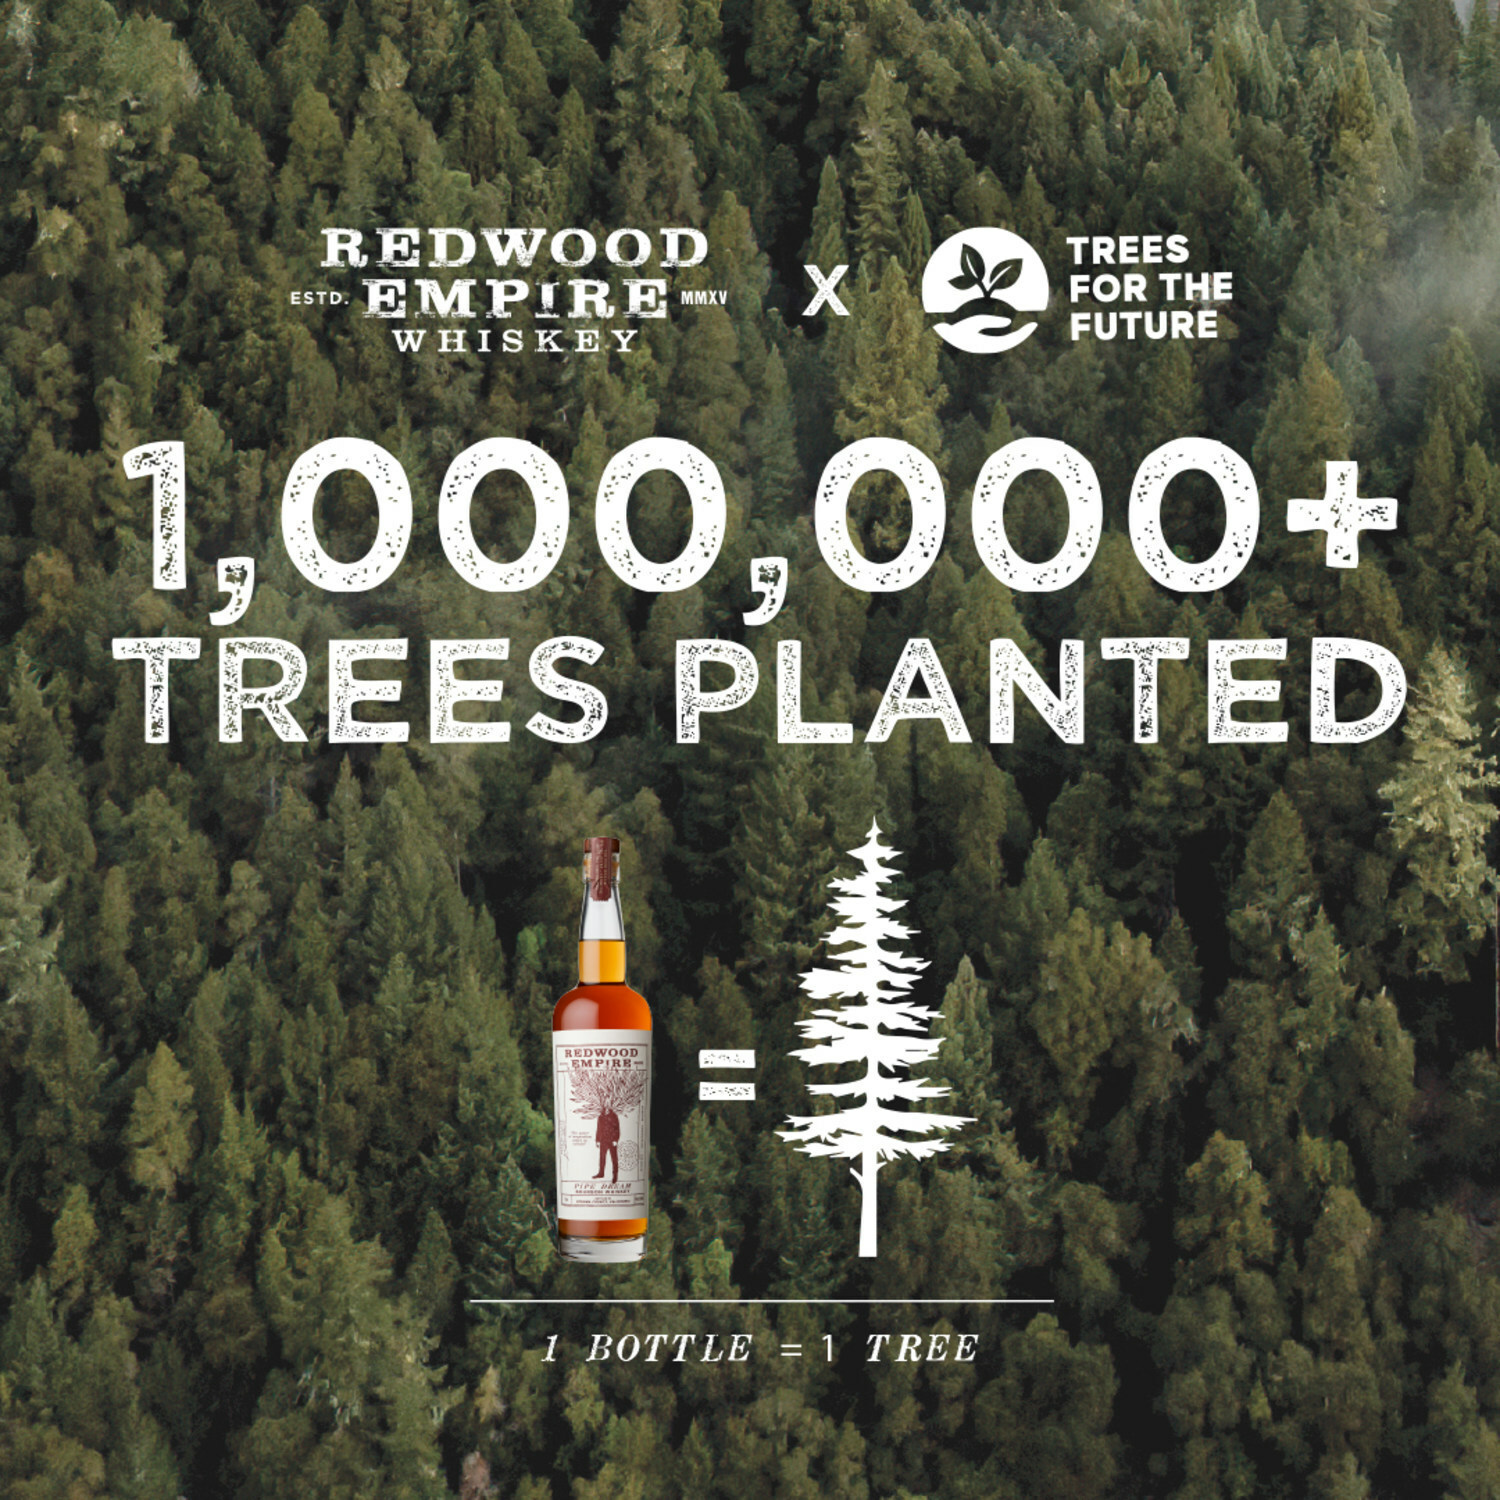 Redwood Empire Whiskey trees